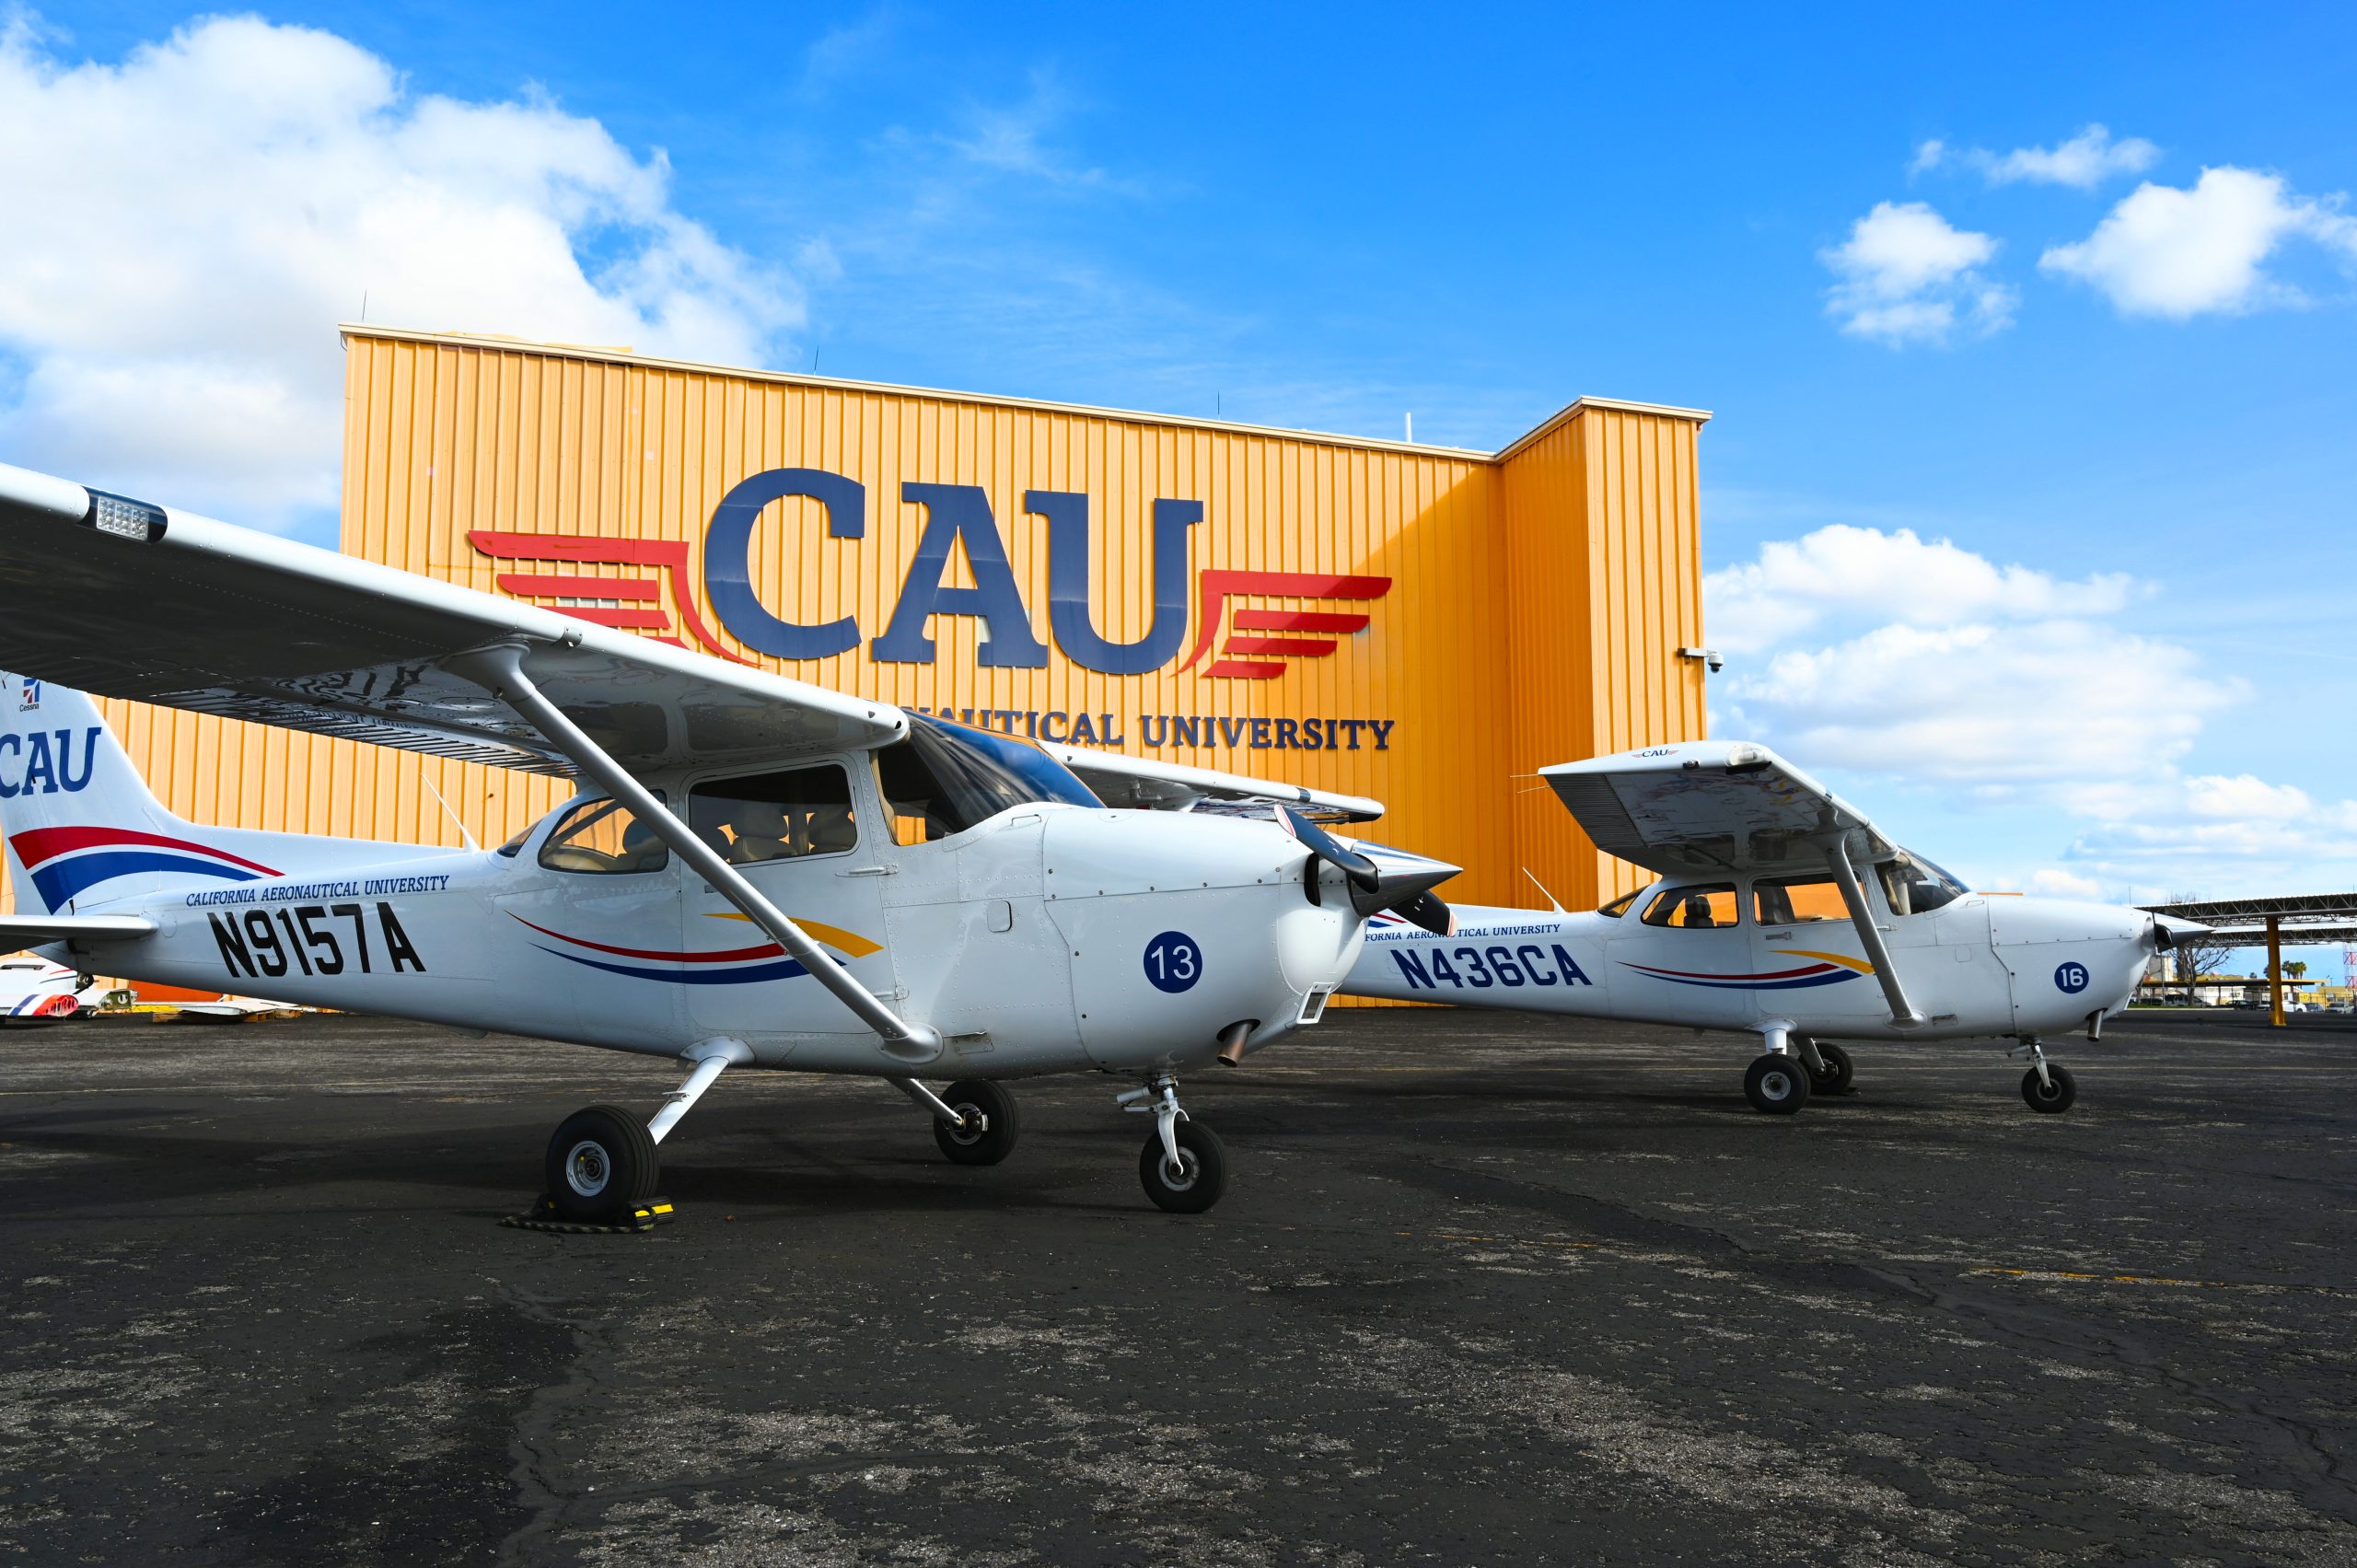 CAU Aircraft Acquisition - Pilot Training AFM.aero